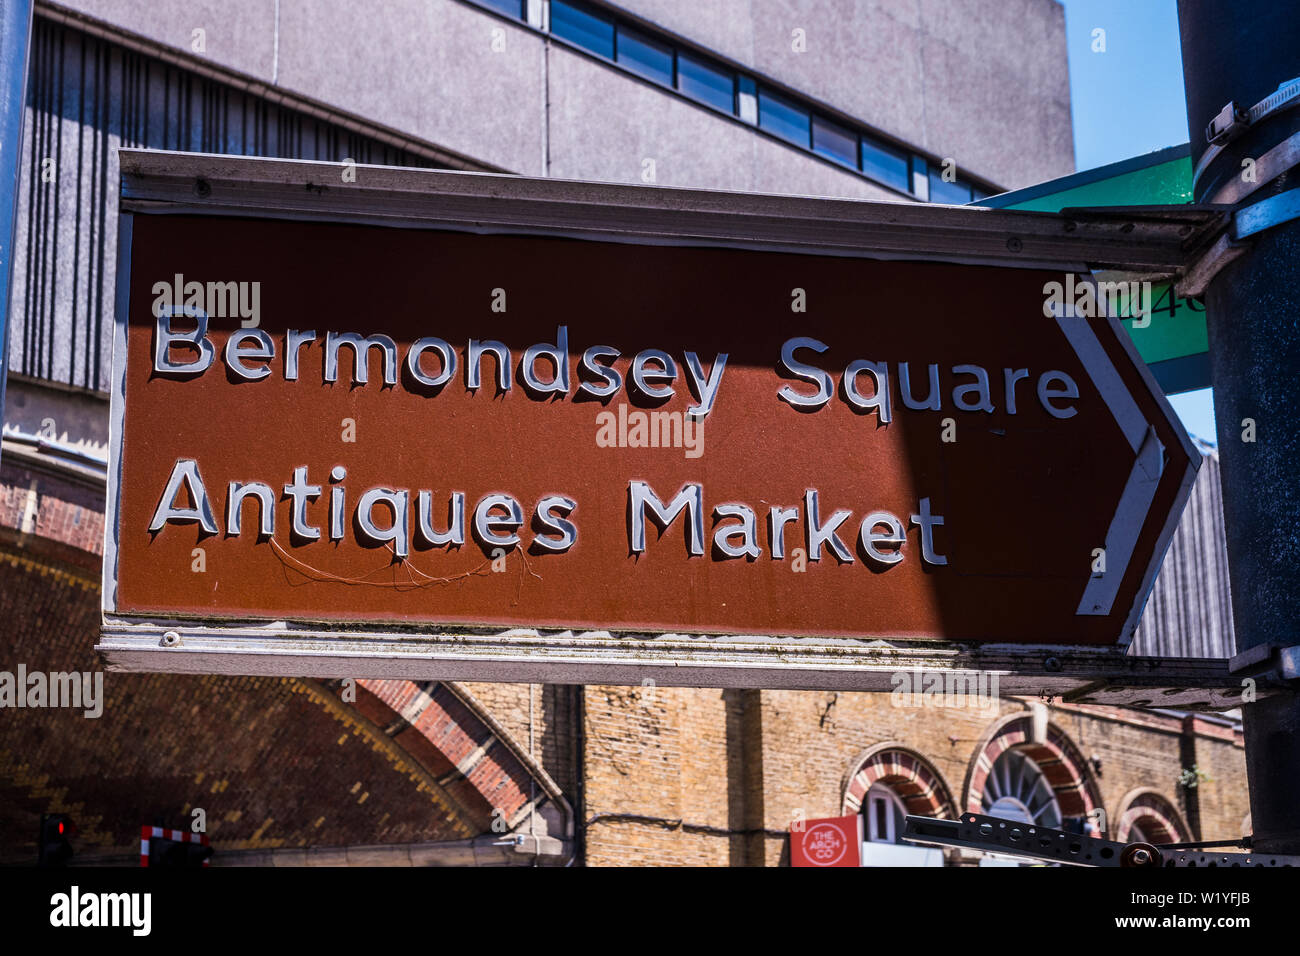 Bermondsey Square Antiques Market street sign, Borough of Southwark, London, England, UK. Stock Photo